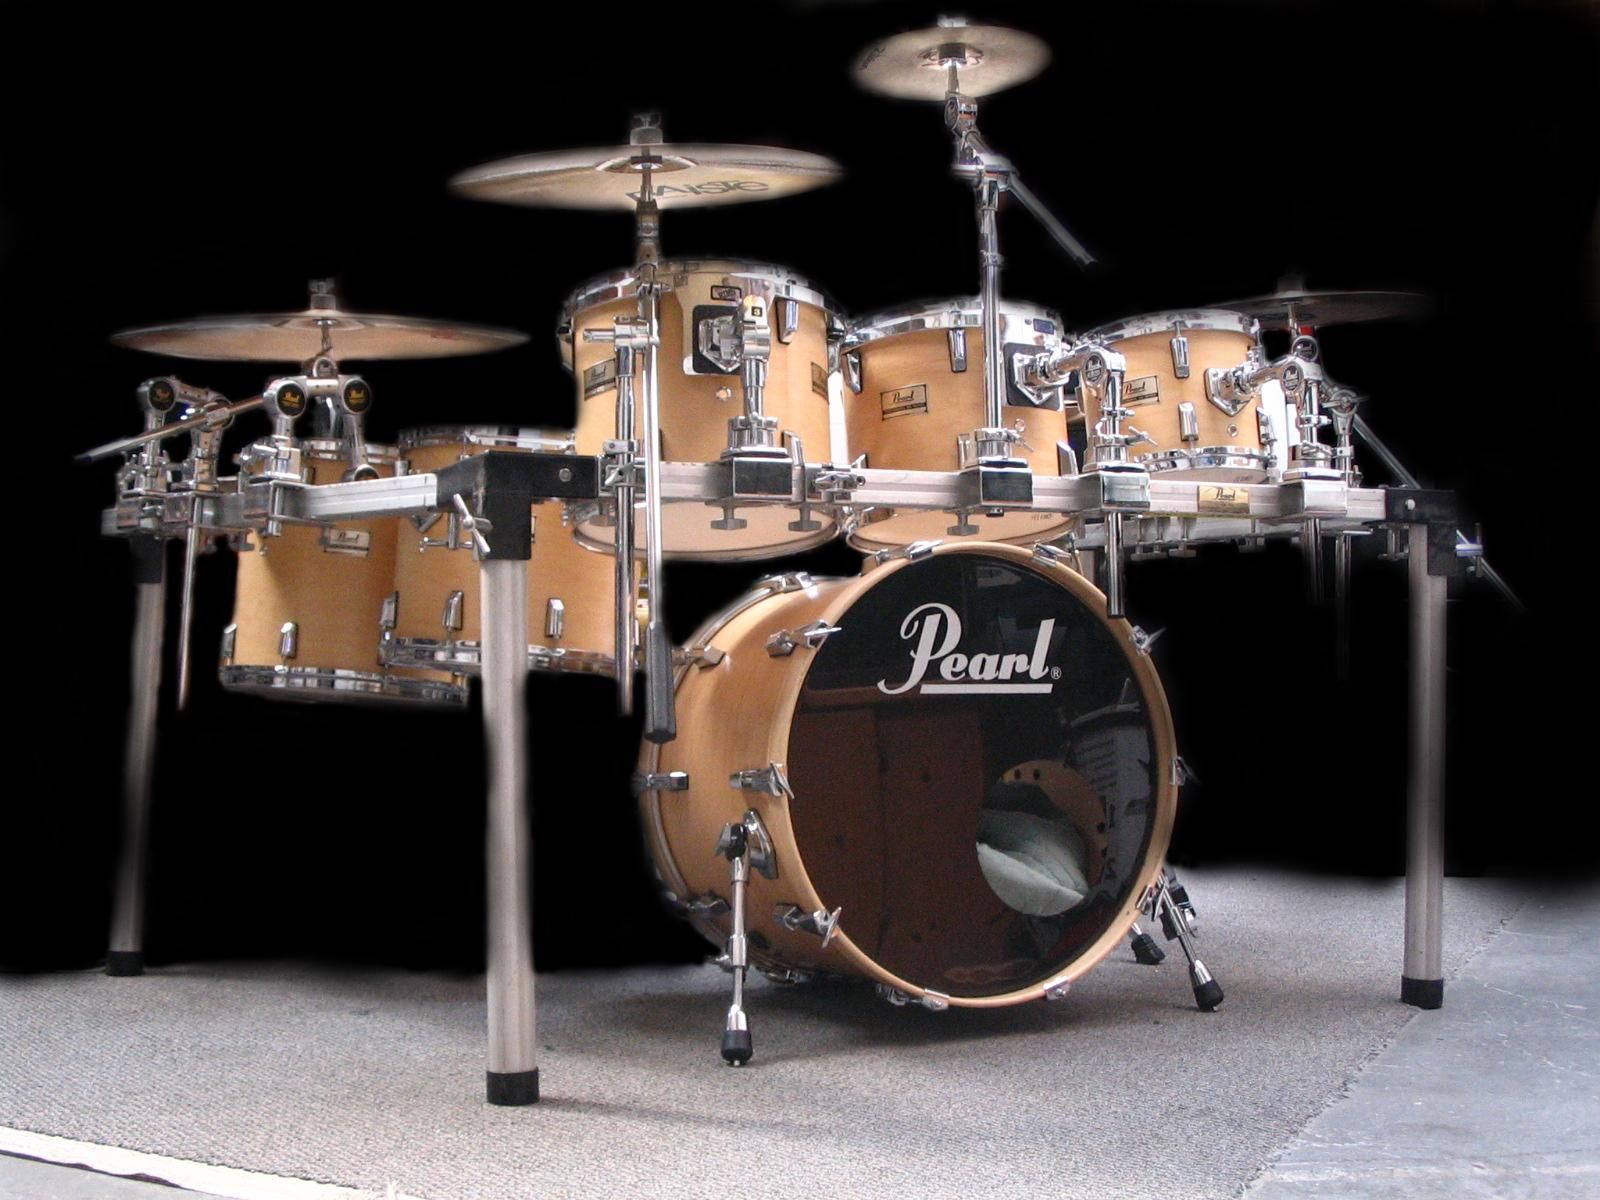 drums wallpaper drum wallpaper pearl drums wallpaper drummer